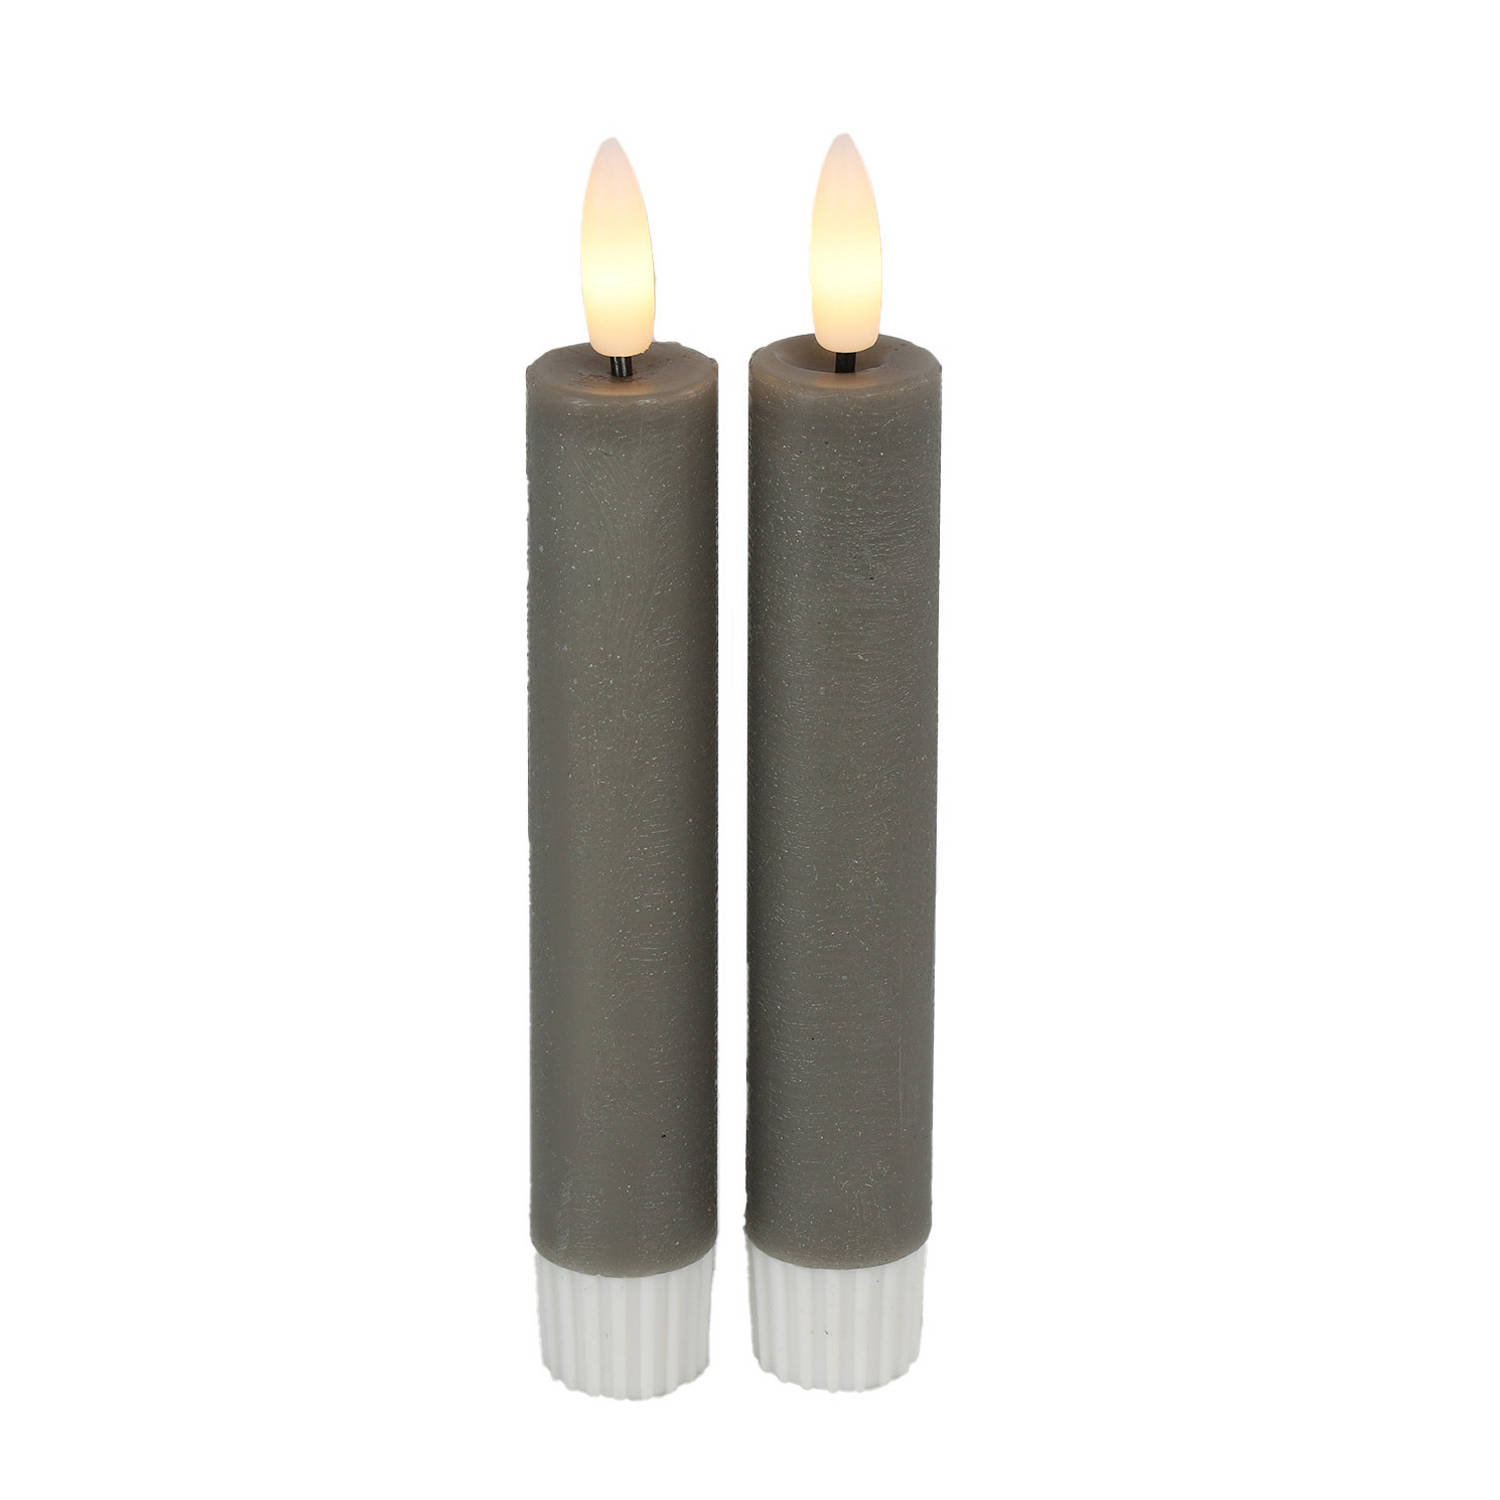 Kaarsen - Led - Wax - Decoratie - LED kaars met bewegende vlam - Grijs - 15cm - Countryfield